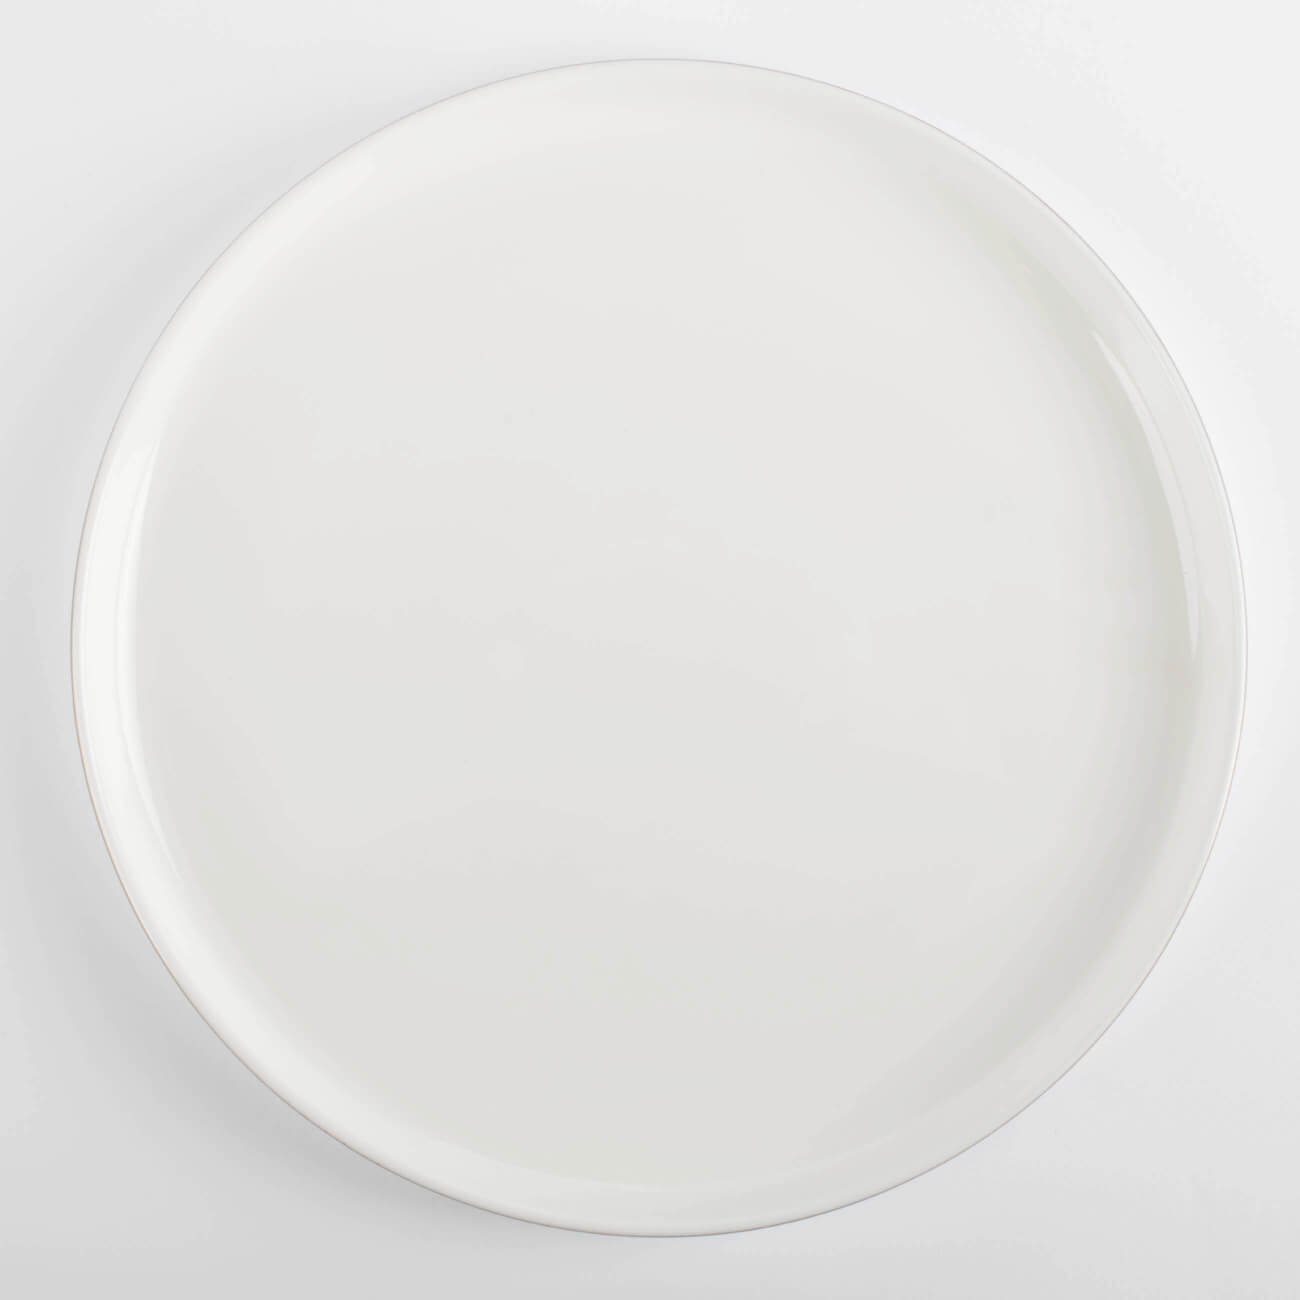 Тарелка обеденная, 26 см, фарфор F, белая, Ideal gold тарелка обеденная home and style comet 28 см терракота